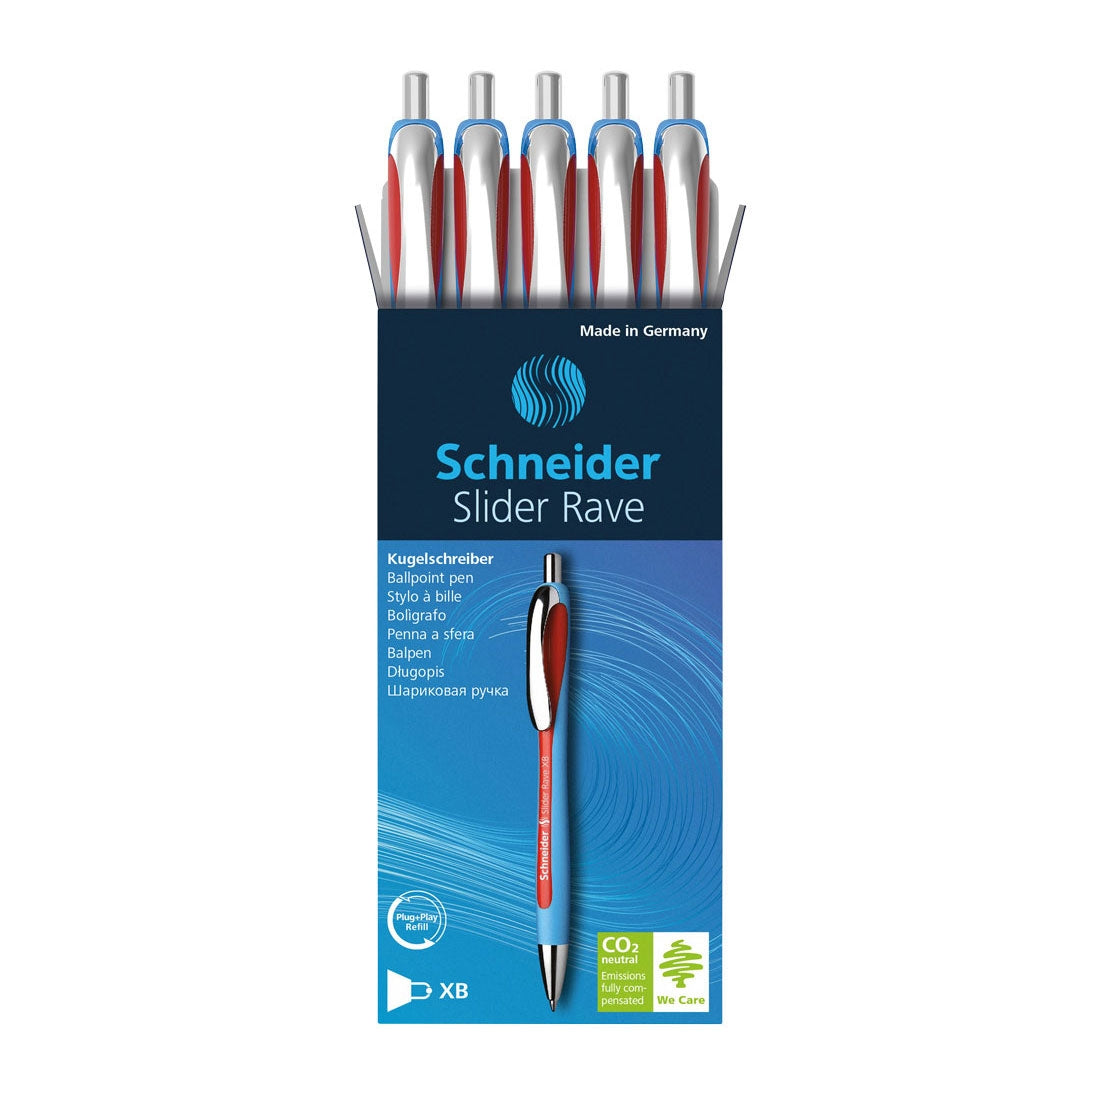 Rave Ballpoint Pens XB, Box of 5 units@colour_red